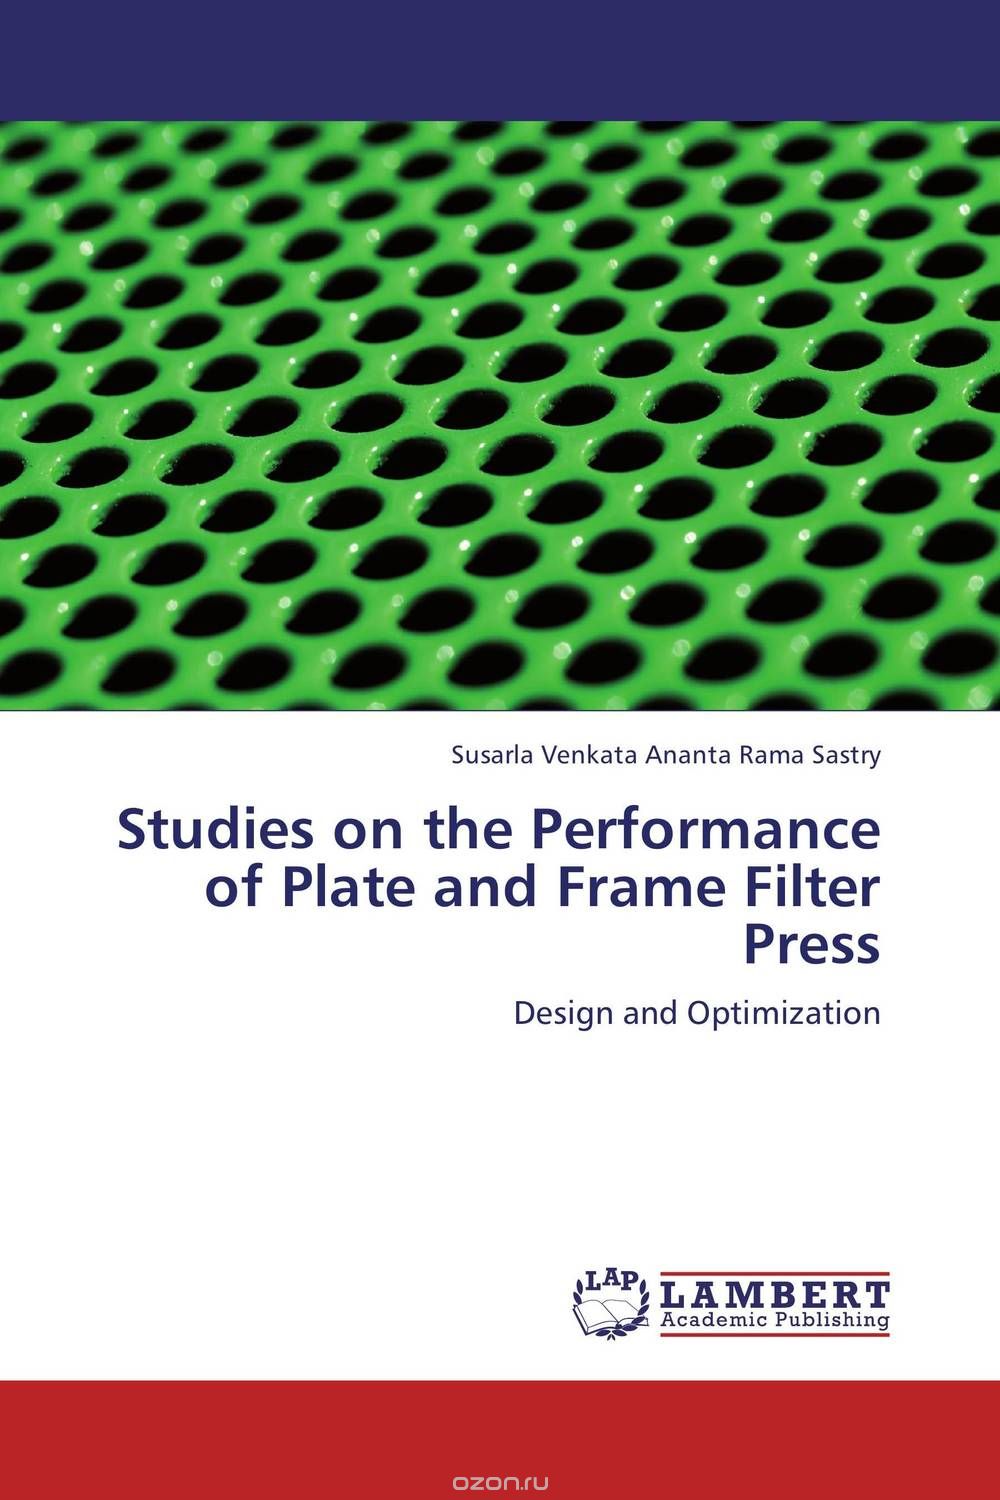 Скачать книгу "Studies on the Performance of Plate and Frame Filter Press"